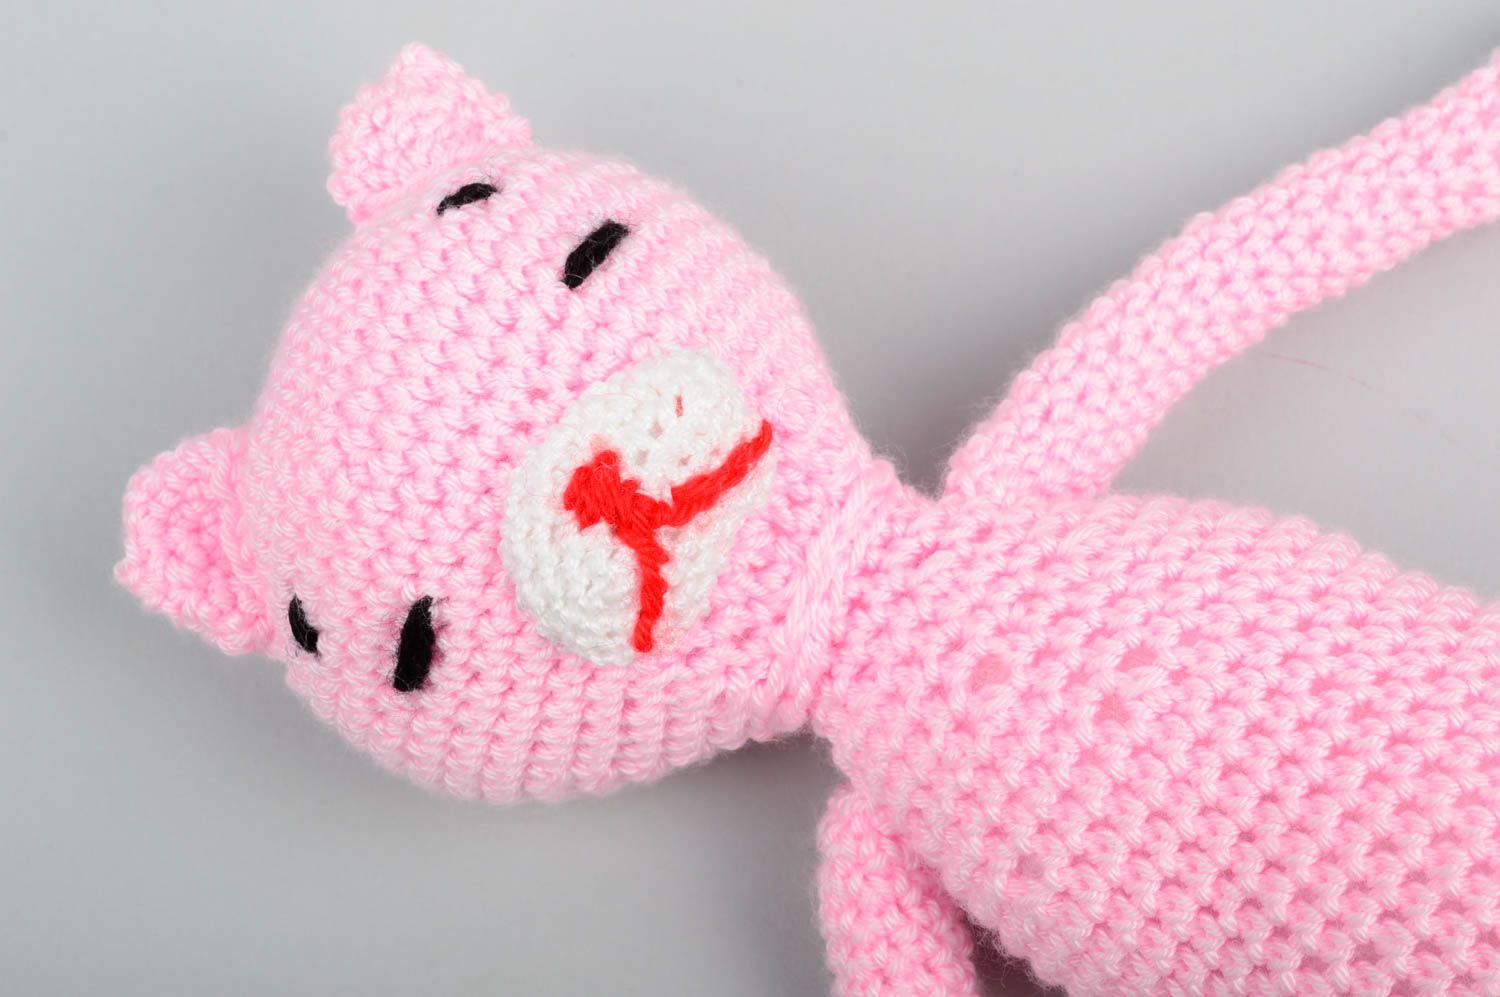 Handmade crocheted soft toy stylish pink toy cute children present kids toy photo 5